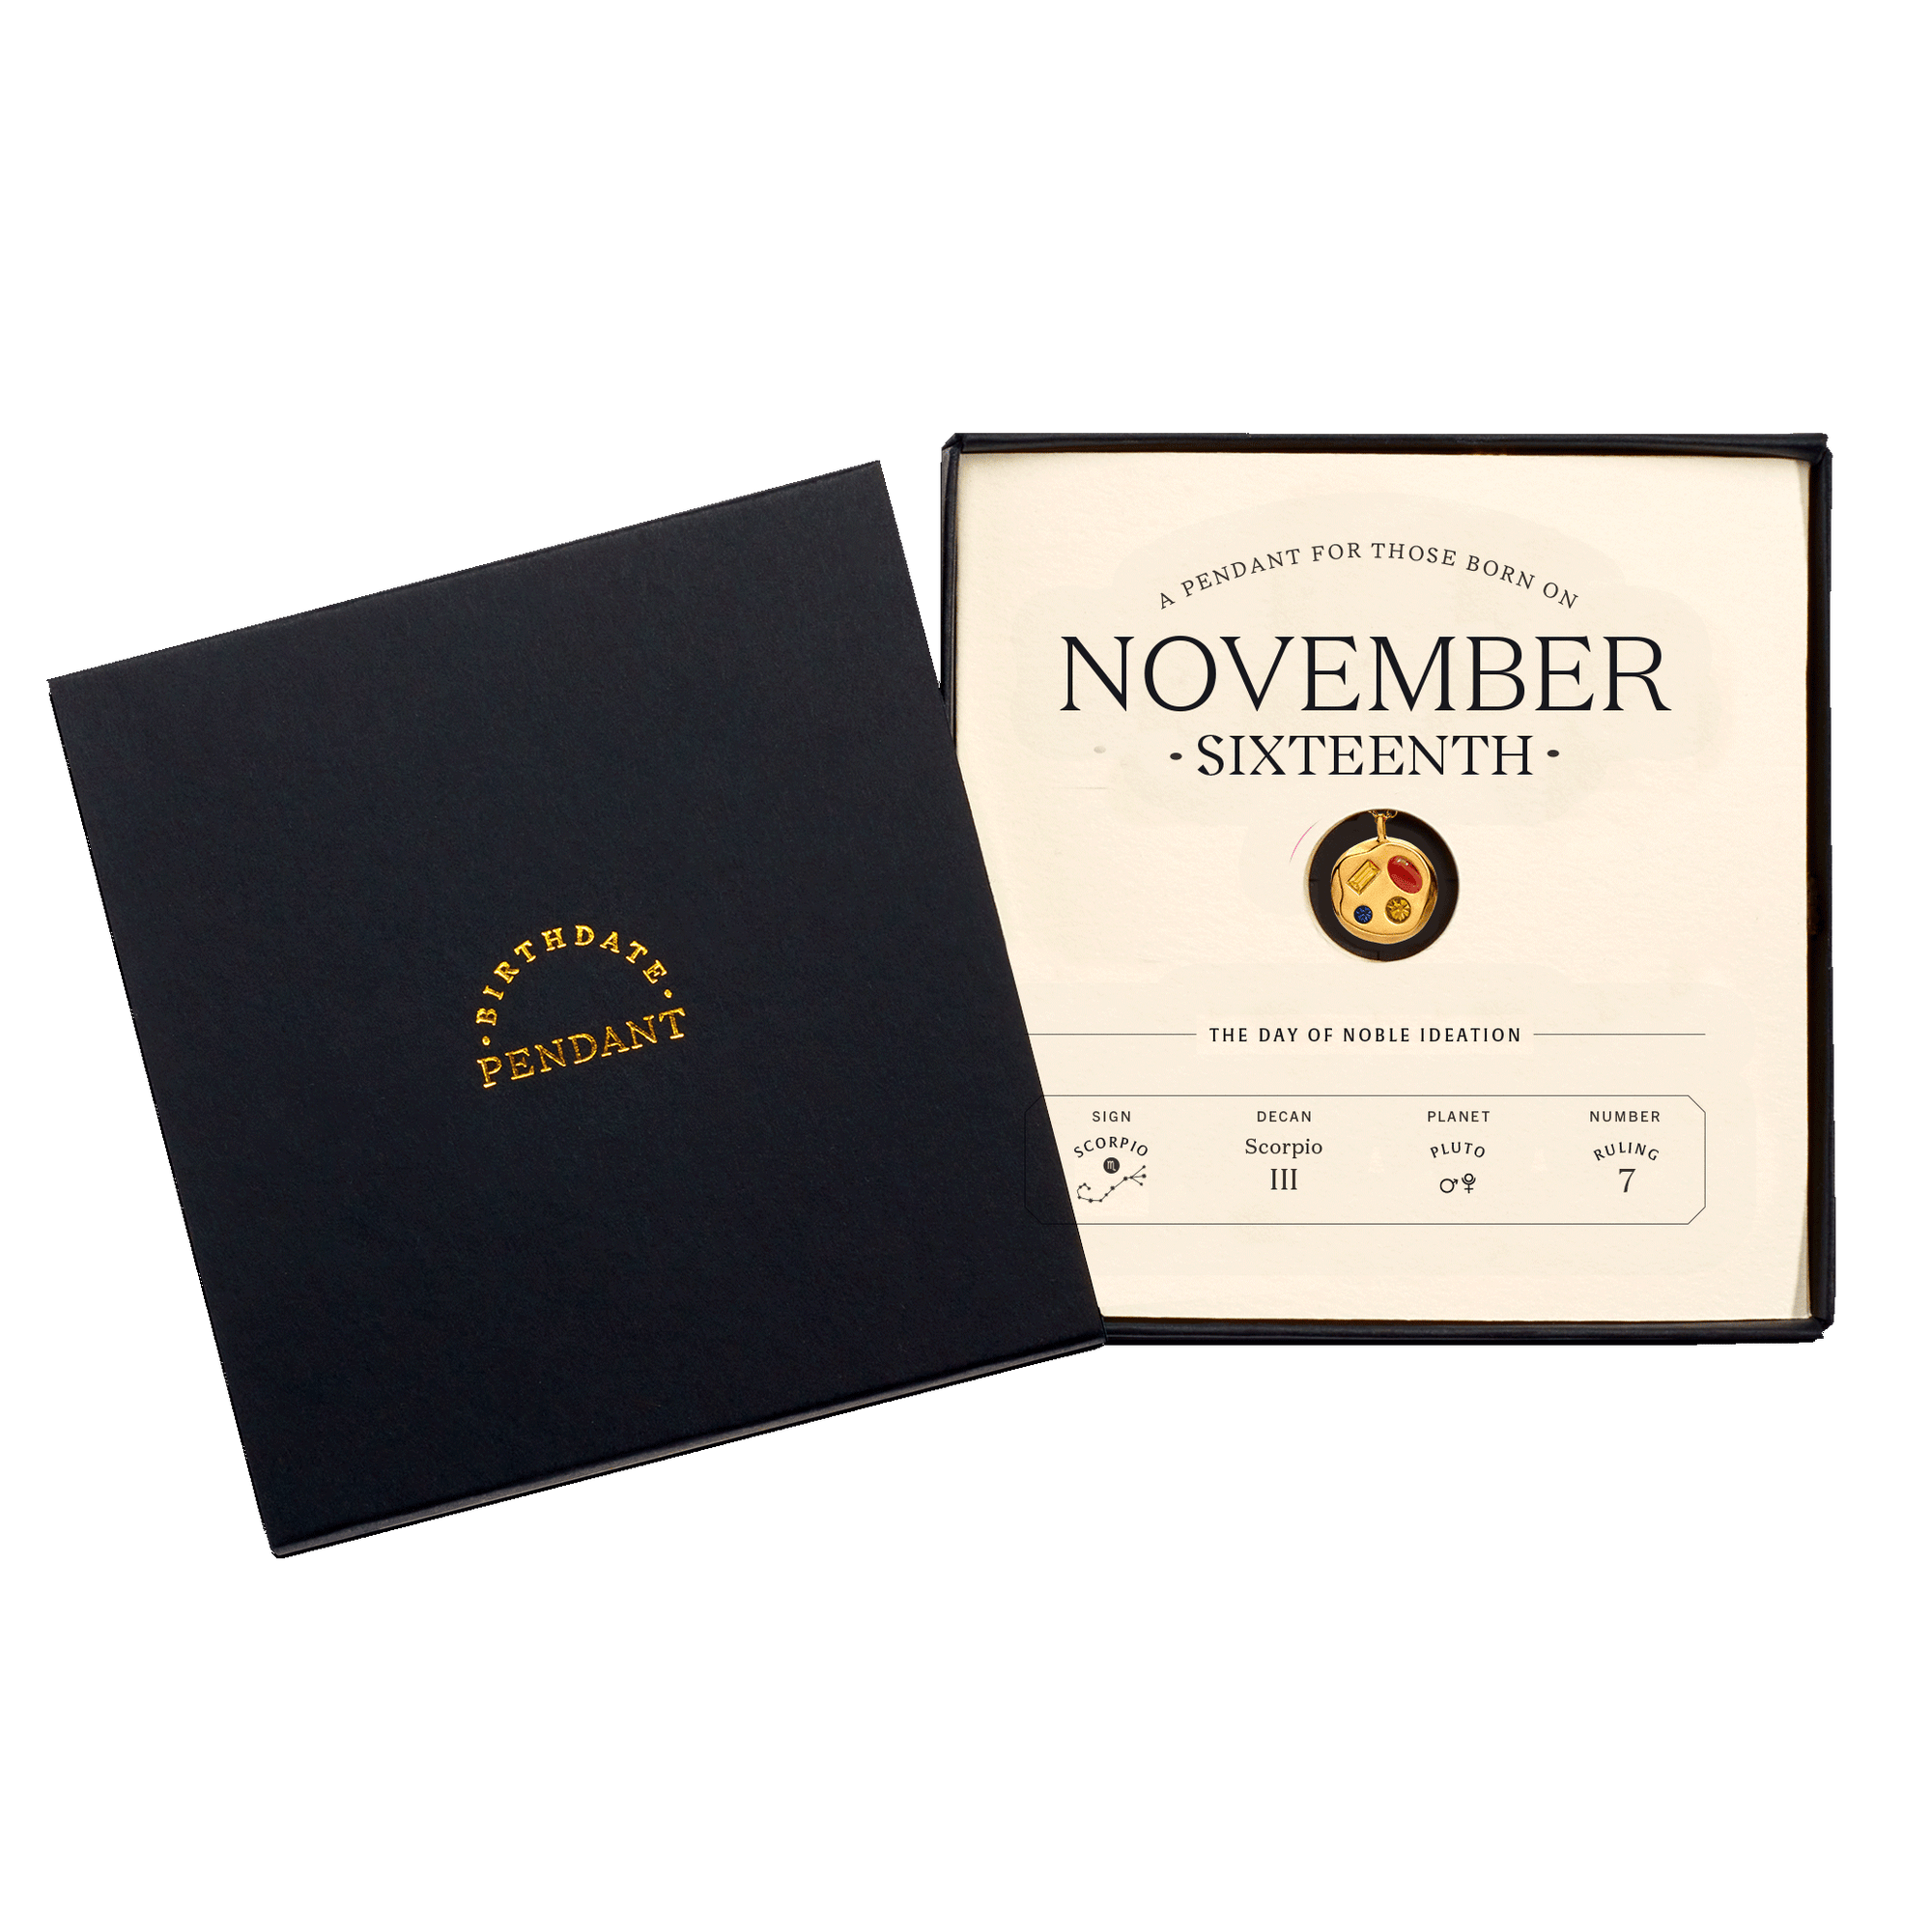 The November Sixteenth Pendant inside its box